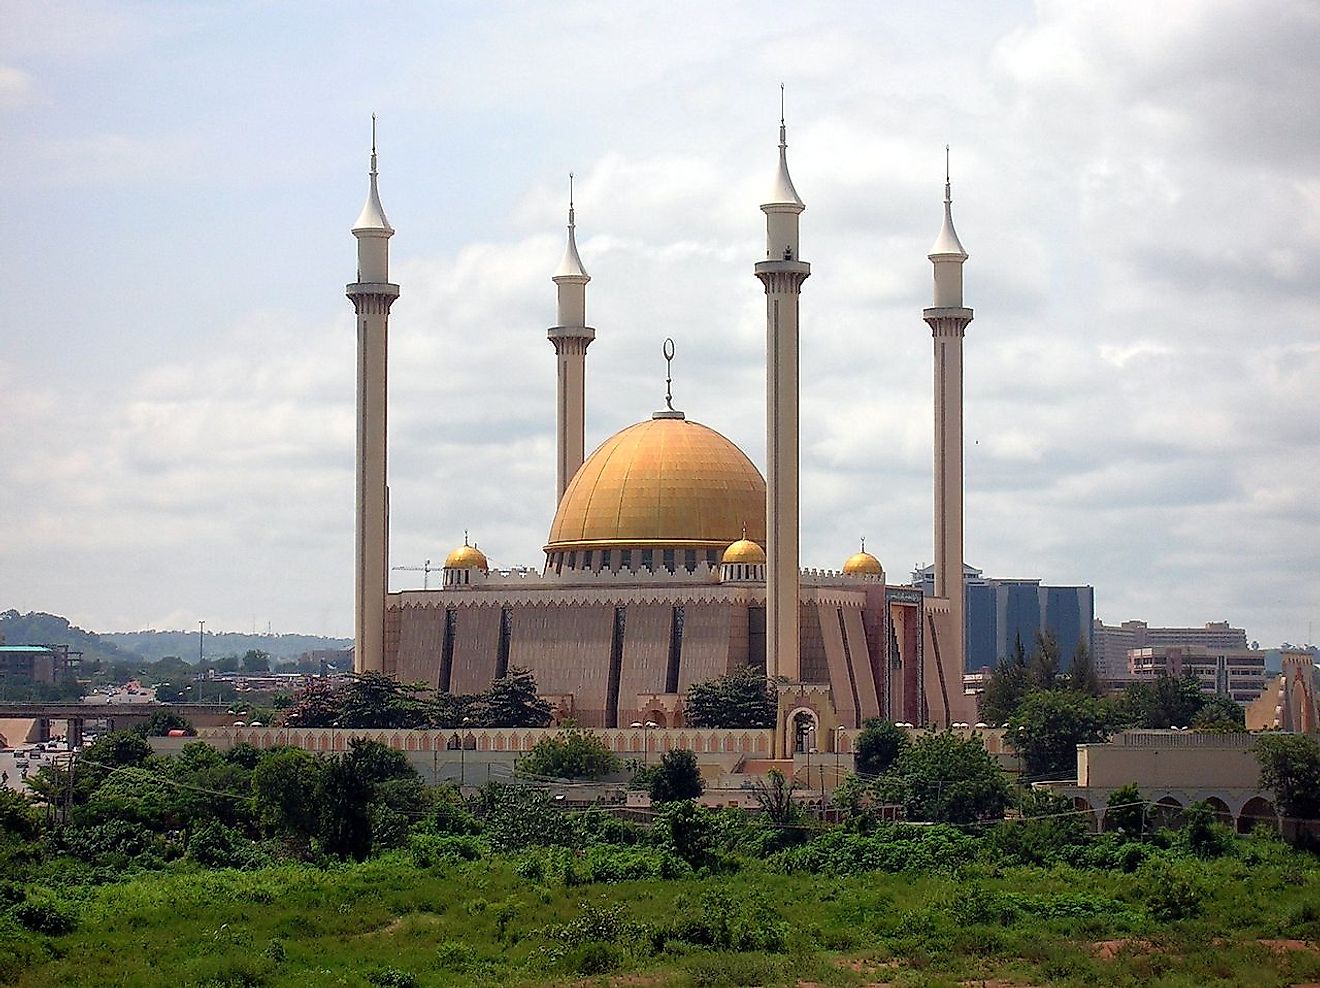 Abuja National Mosque in Nigeria. Image credit: Shiraz Chakera/Wikimedia.org